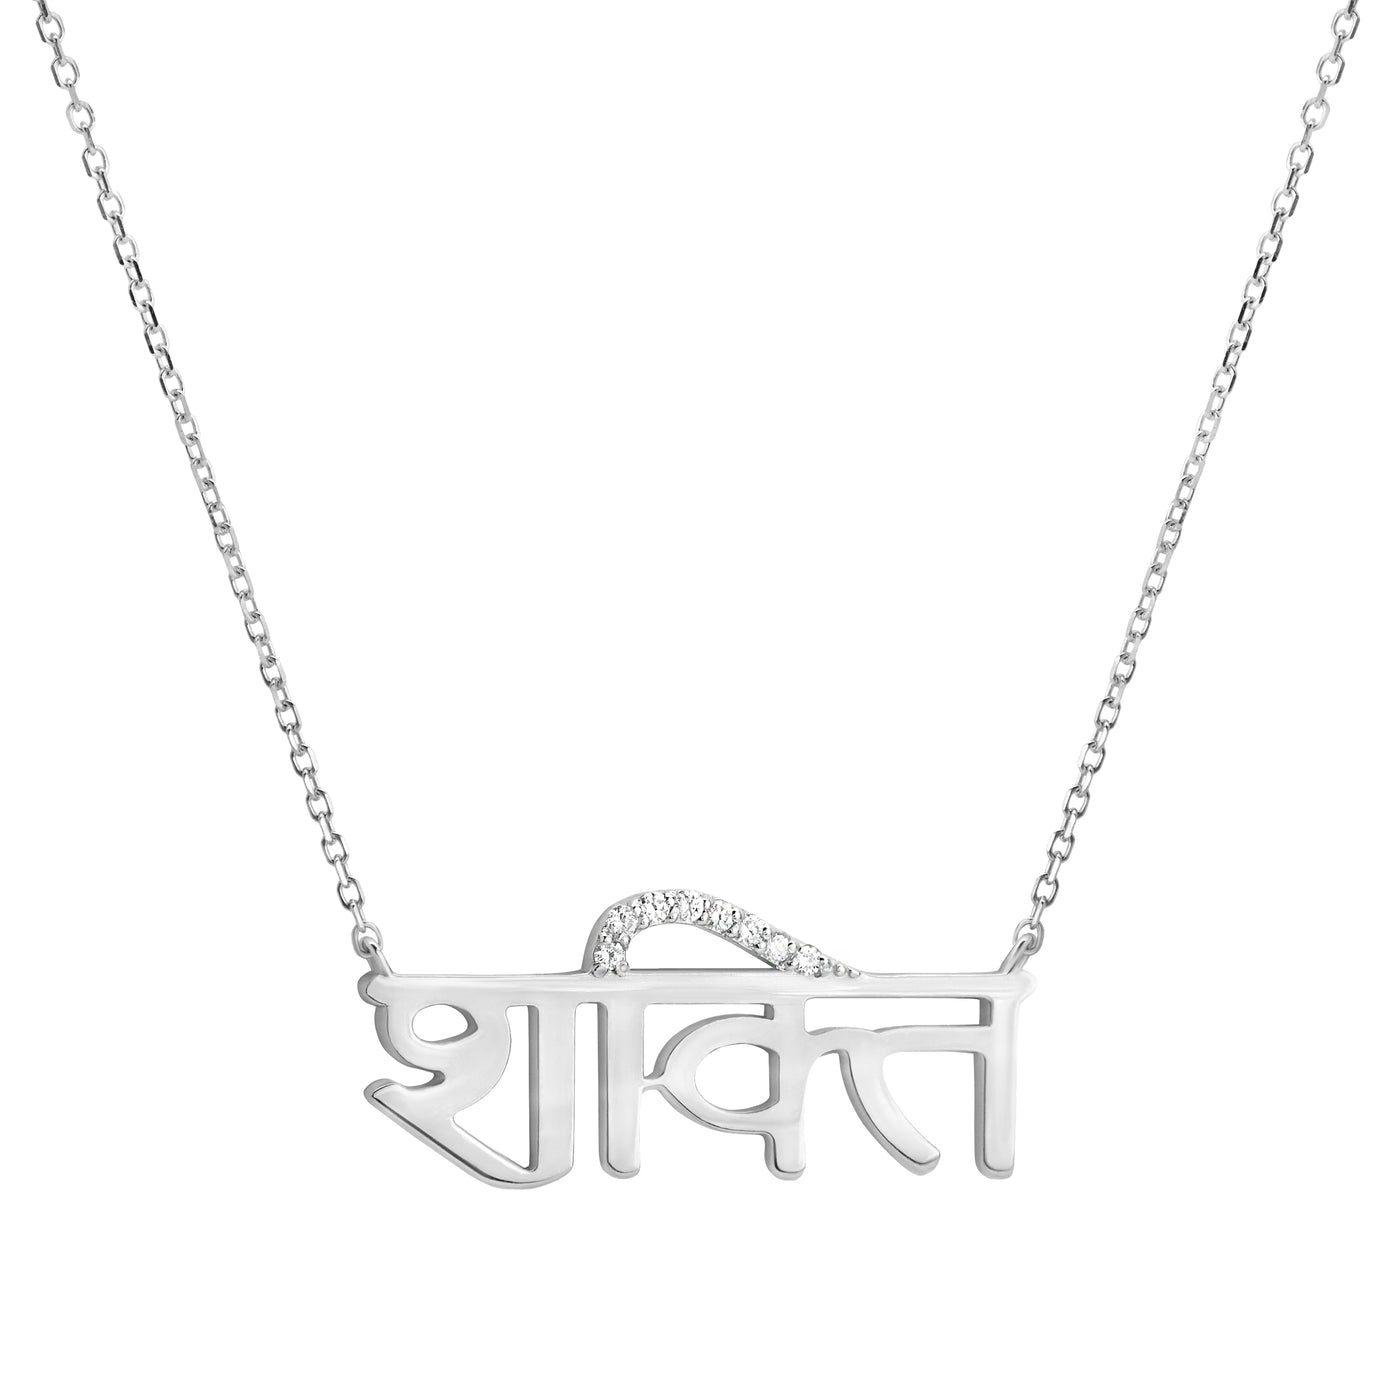 14k Karat white gold Shakti-strength necklace with diamonds on white background